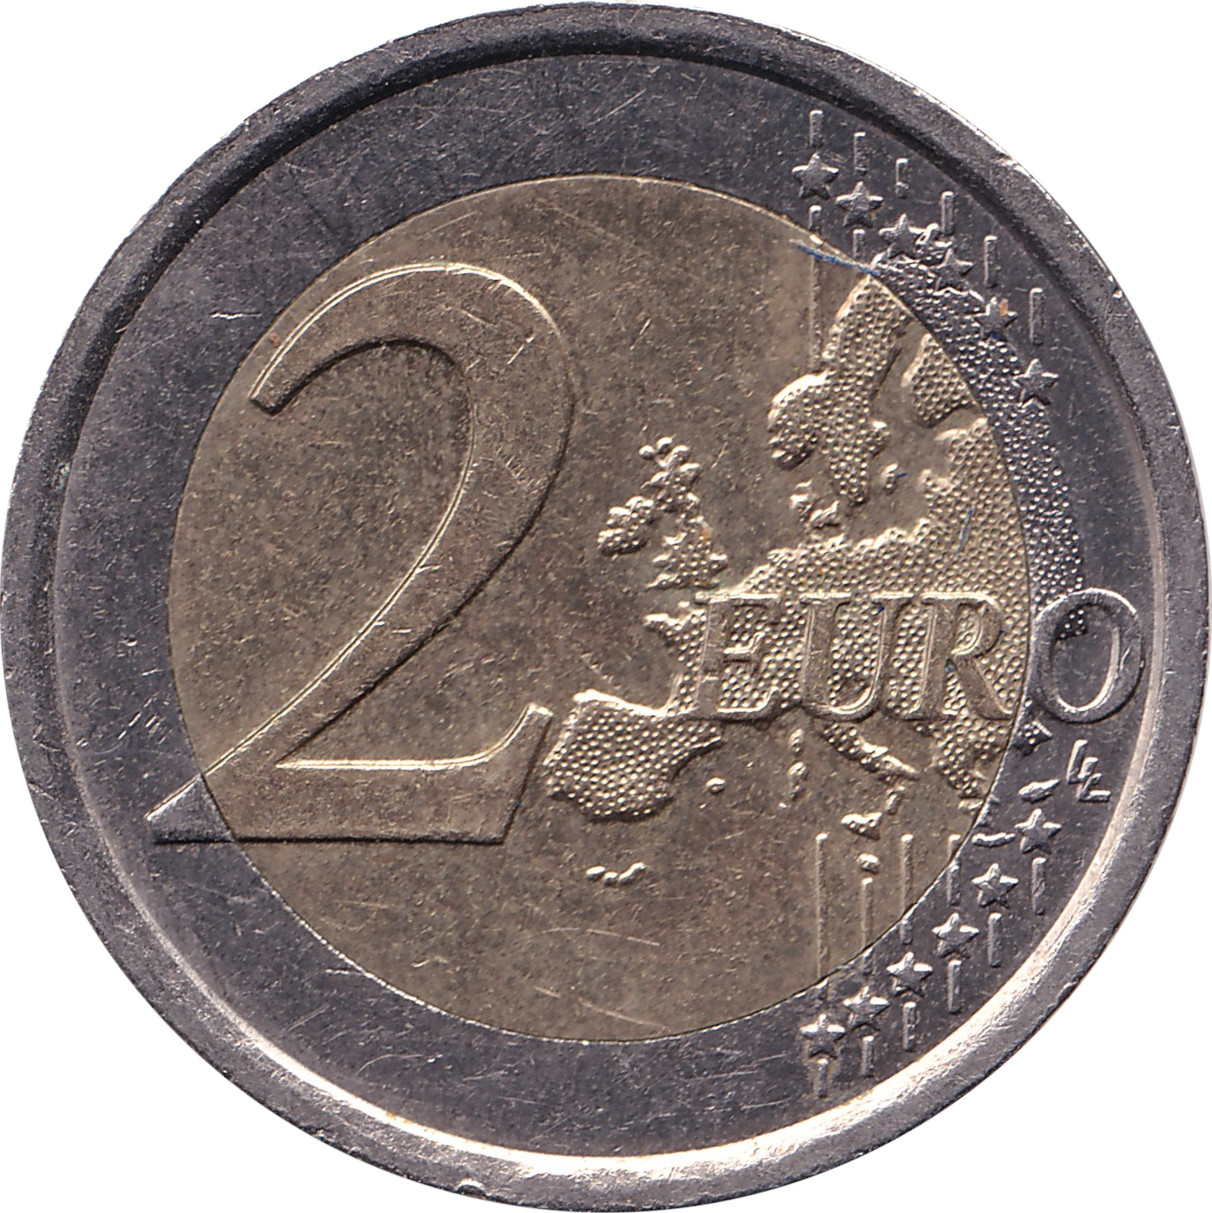 2 euro - Carabiniers